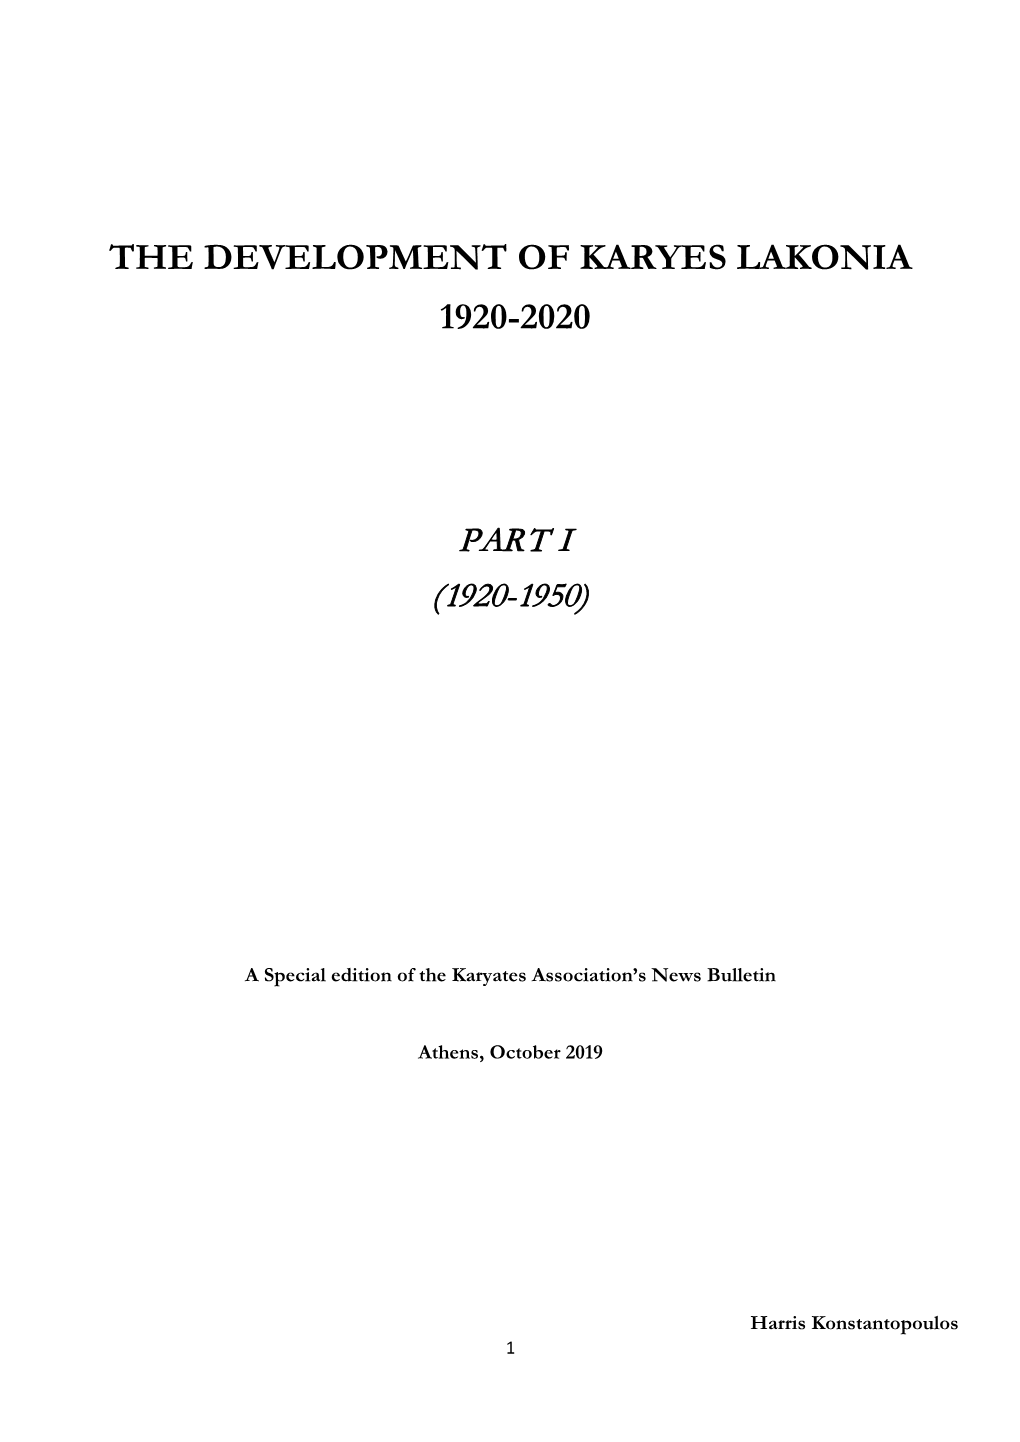 The Development of Karyes Lakonia 1920-2020